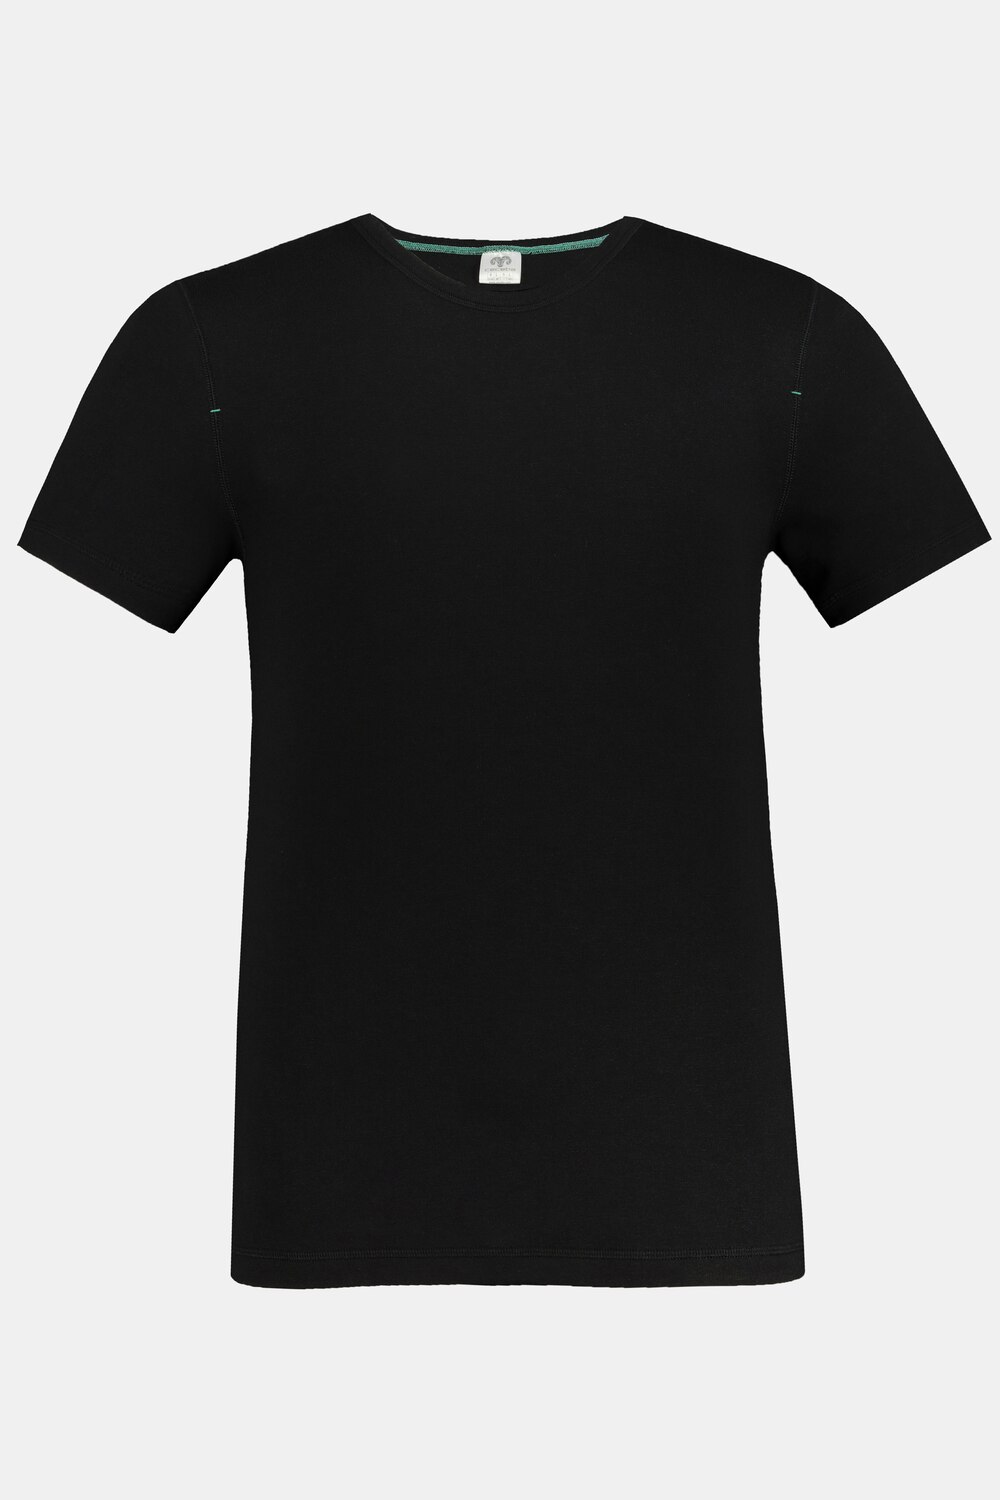 Grote Maten ski-hemd, Heren, zwart, Maat: 5XL, Polyester/Viscose, JP1880